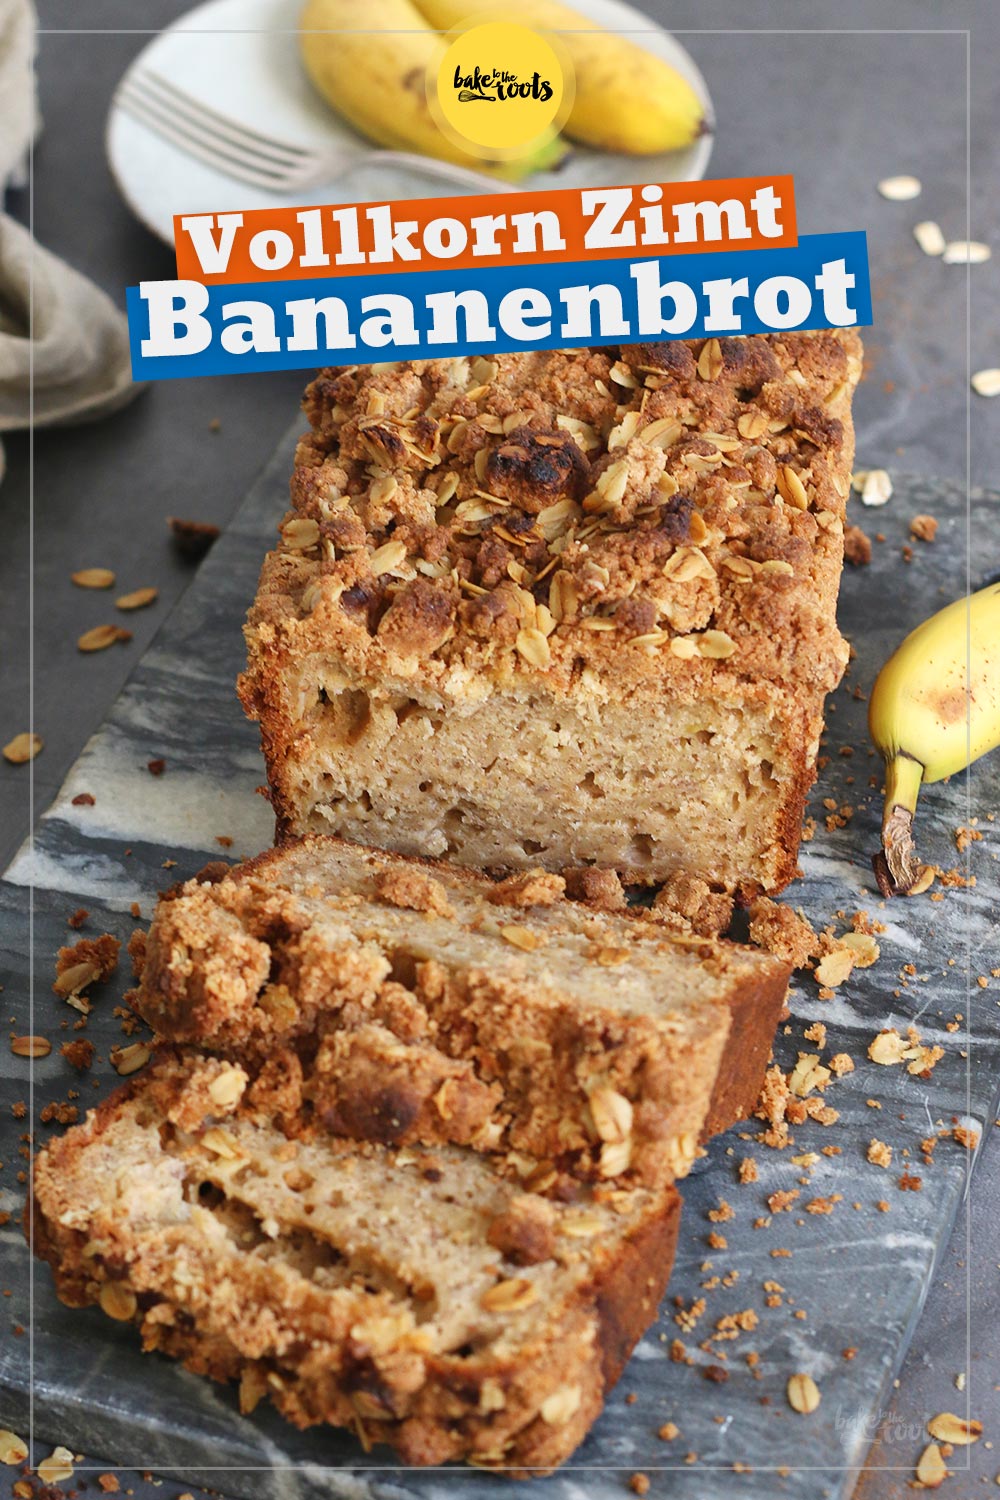 Vollkorn Zimt Bananenbrot | Bake to the roots